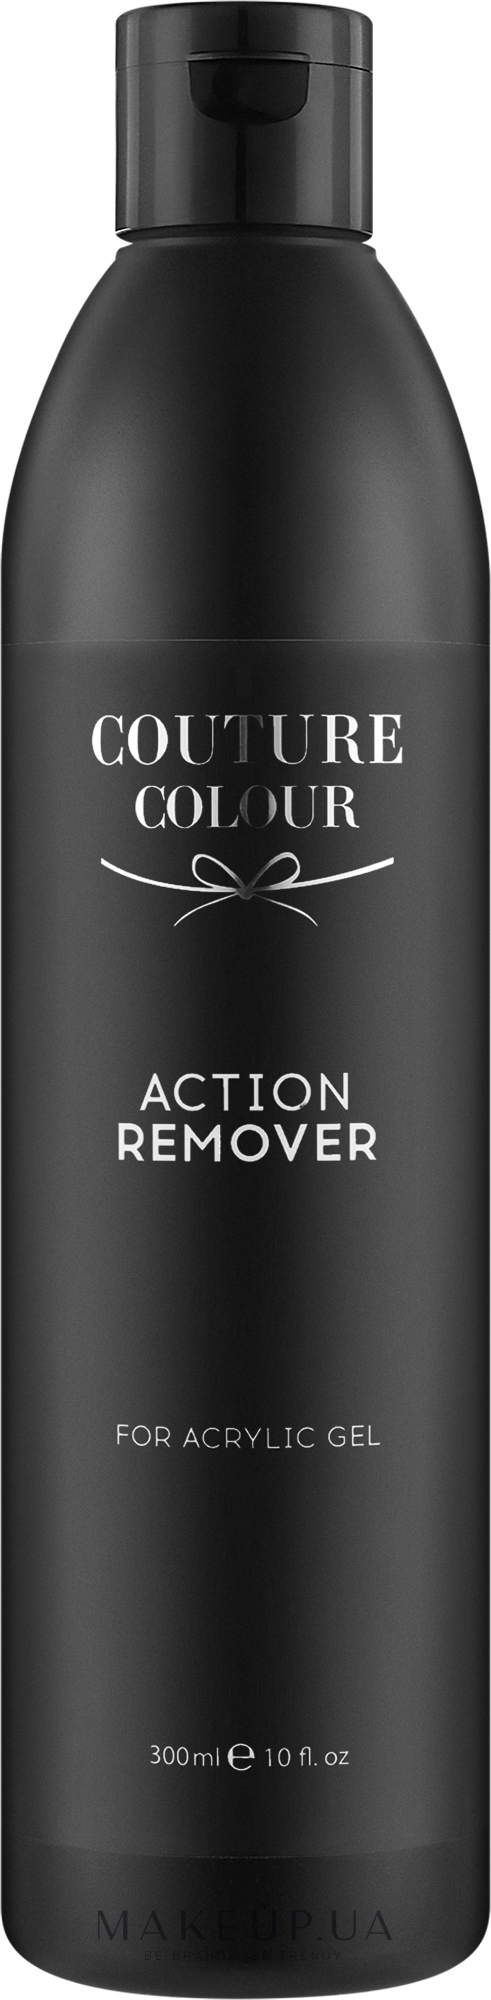 Засіб для видалення акрил-гелю - Couture Colour Action Remover for Acrylic Gel — фото 300ml